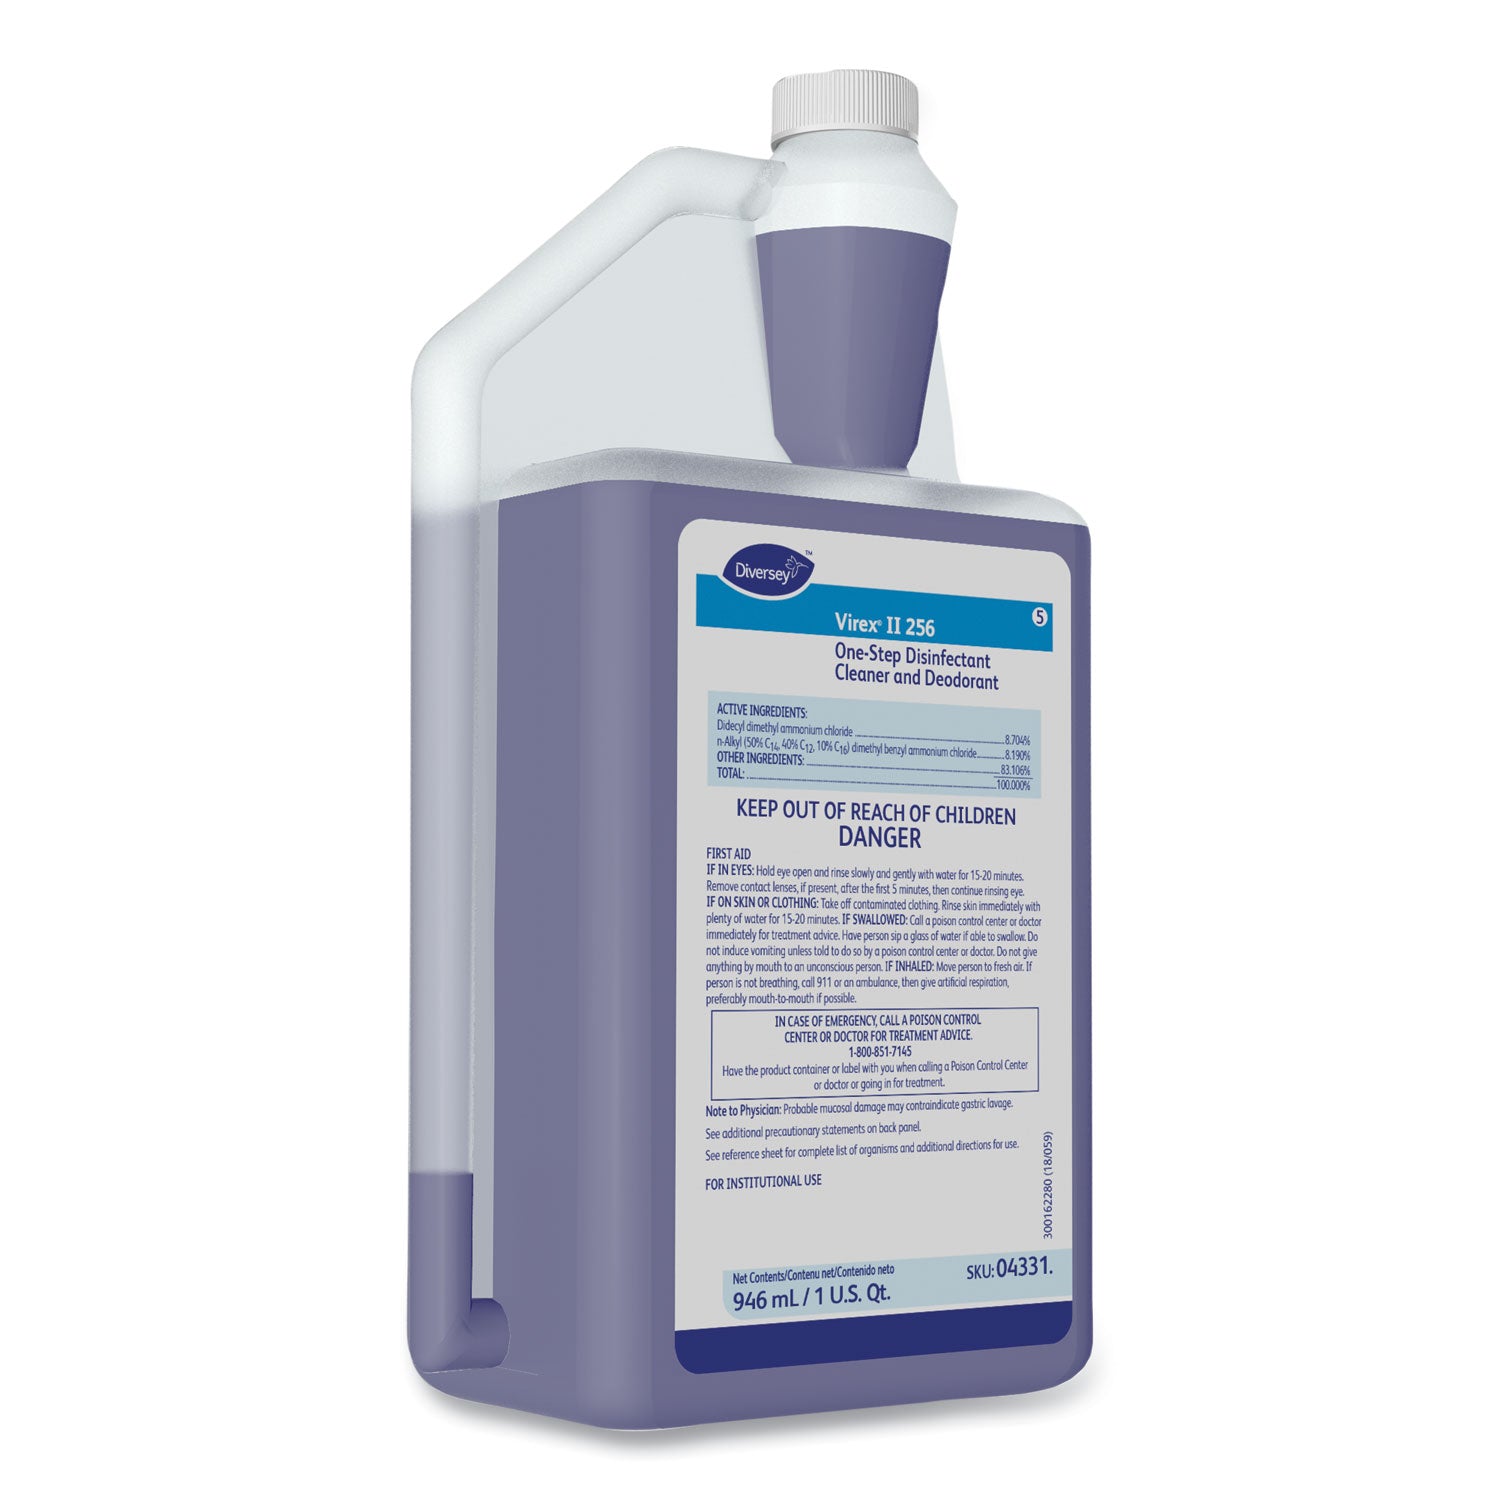 virex-ii-256-one-step-disinfectant-cleaner-deodorant-mint-32oz-bottle6-crtn_dvs04331 - 3